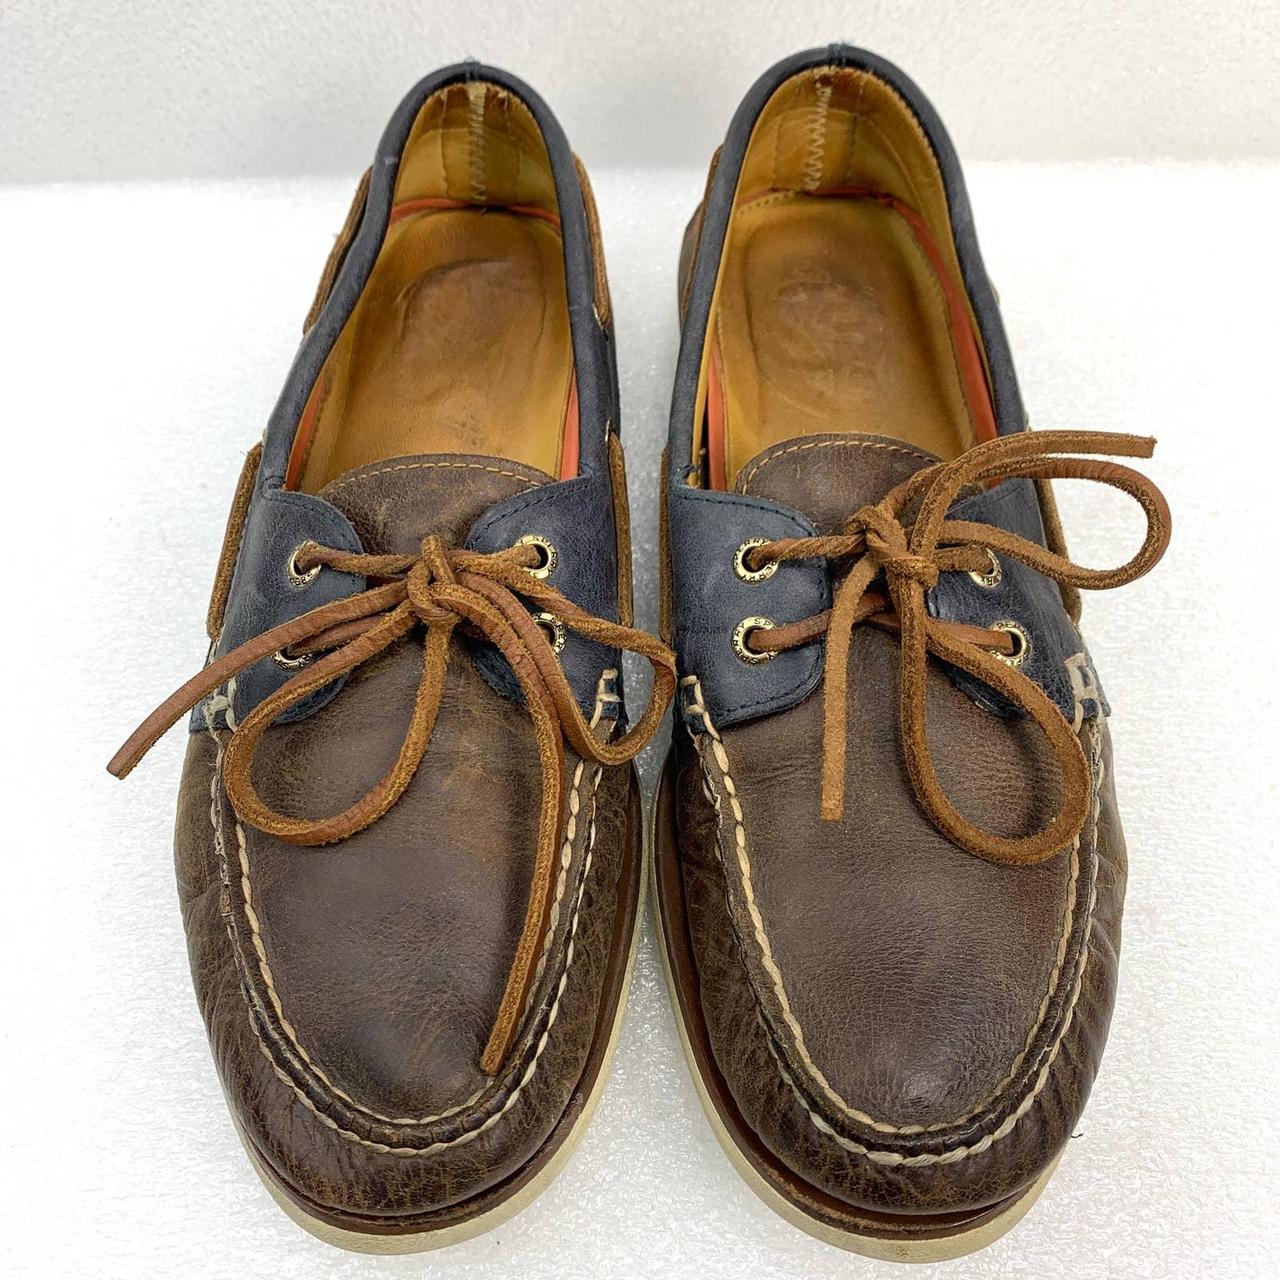 Sperry Authentic Original 2-Eye Boat Shoes in Brown... - Depop